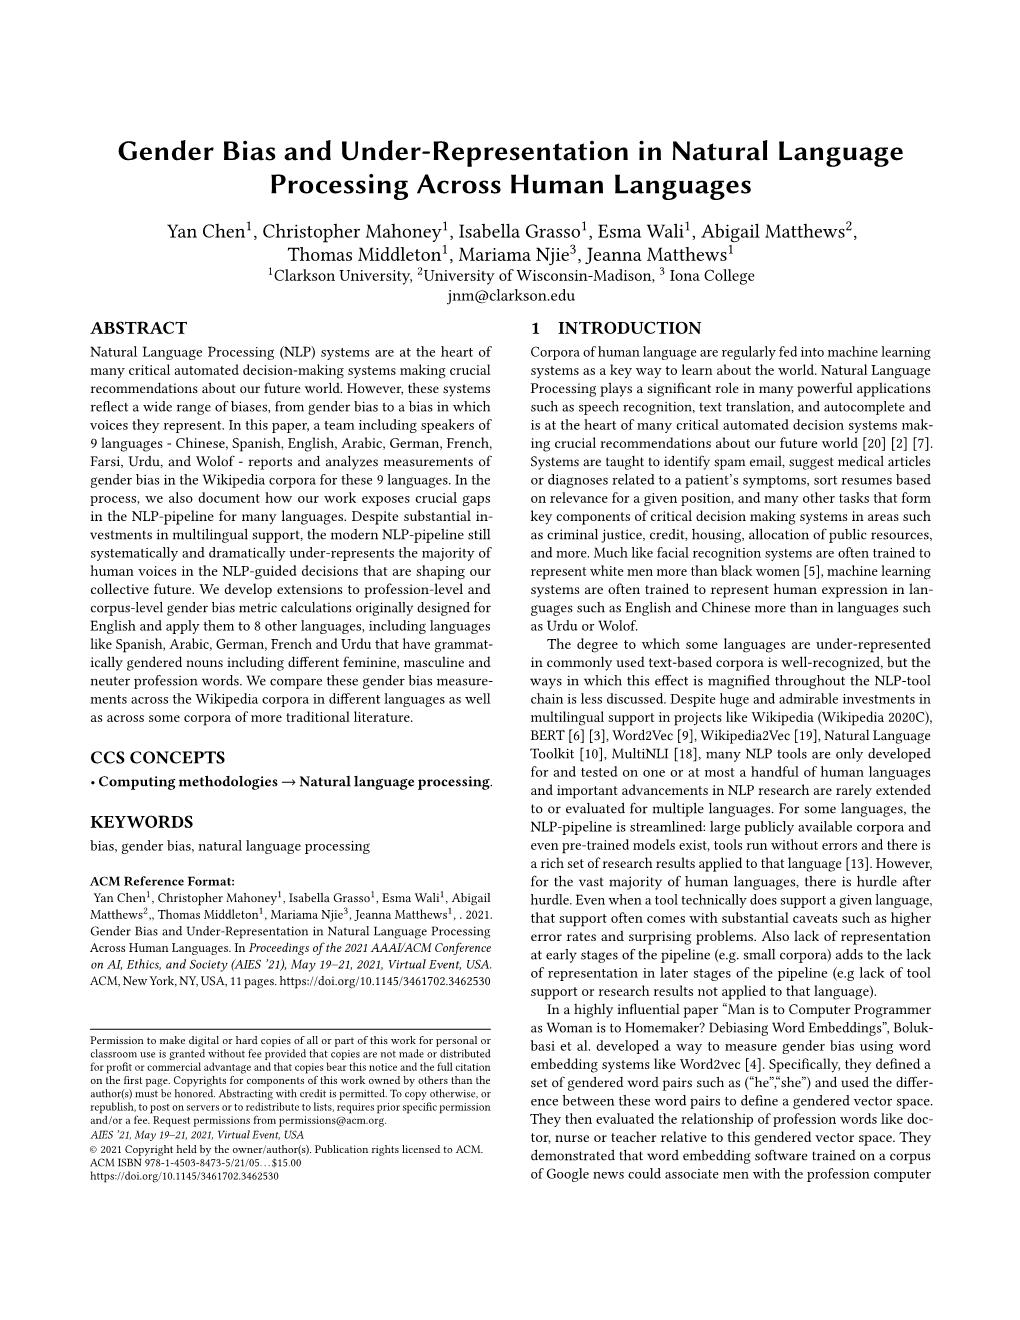 Gender Bias and Under-Representation in Natural Language Processing Across Human Languages